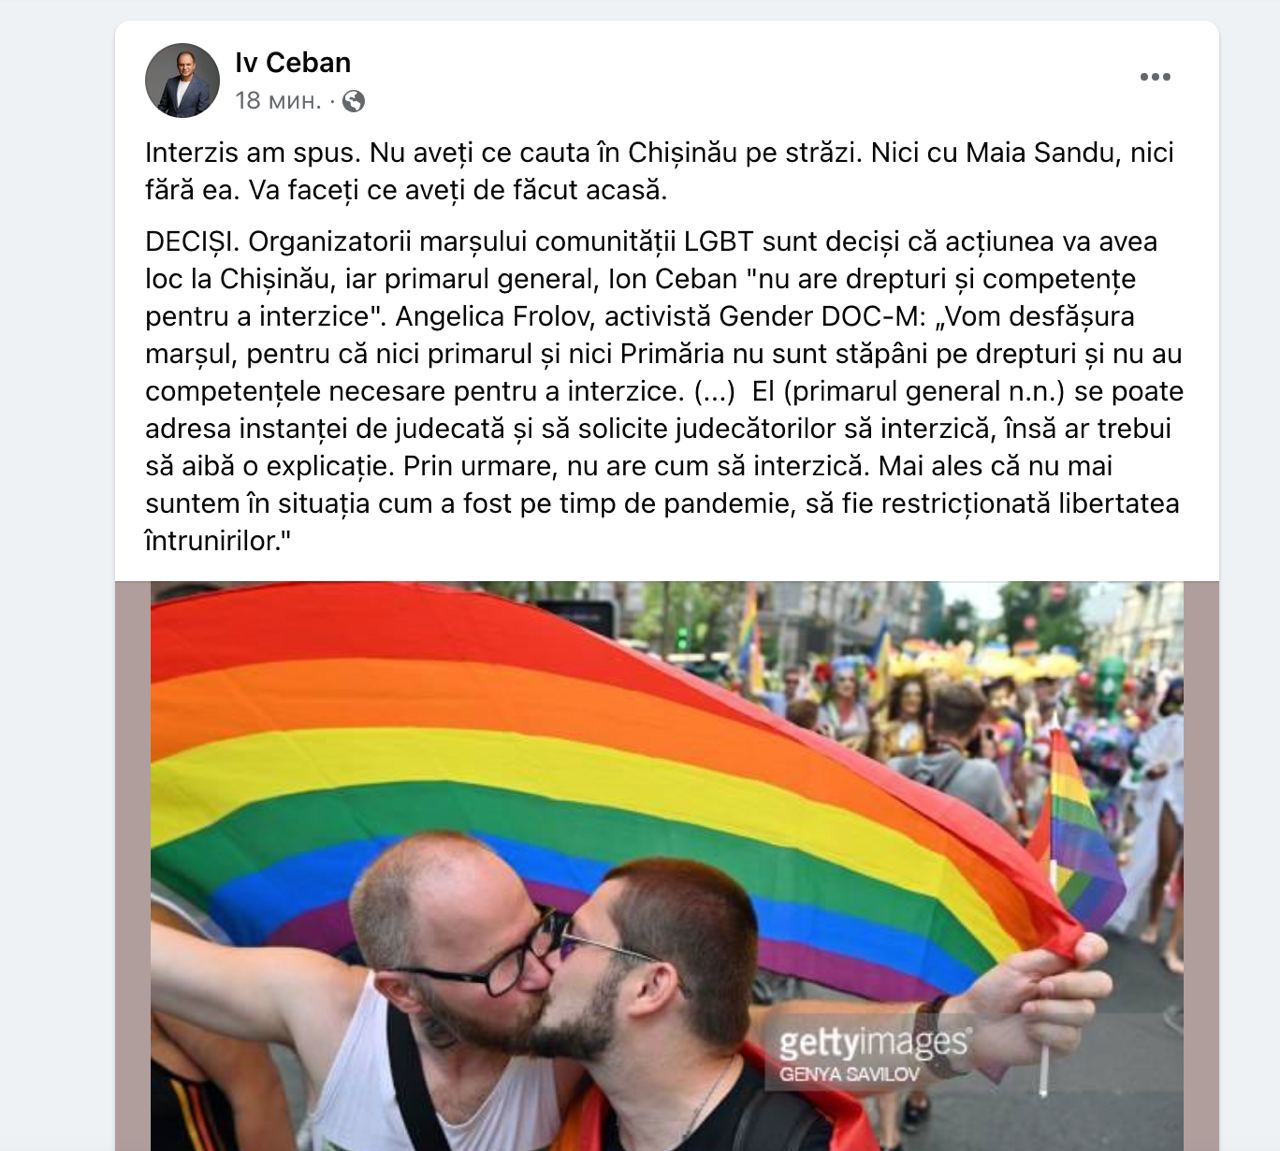 Ион Чебан открыл гей-парадную. А Facebook ее прикрыл